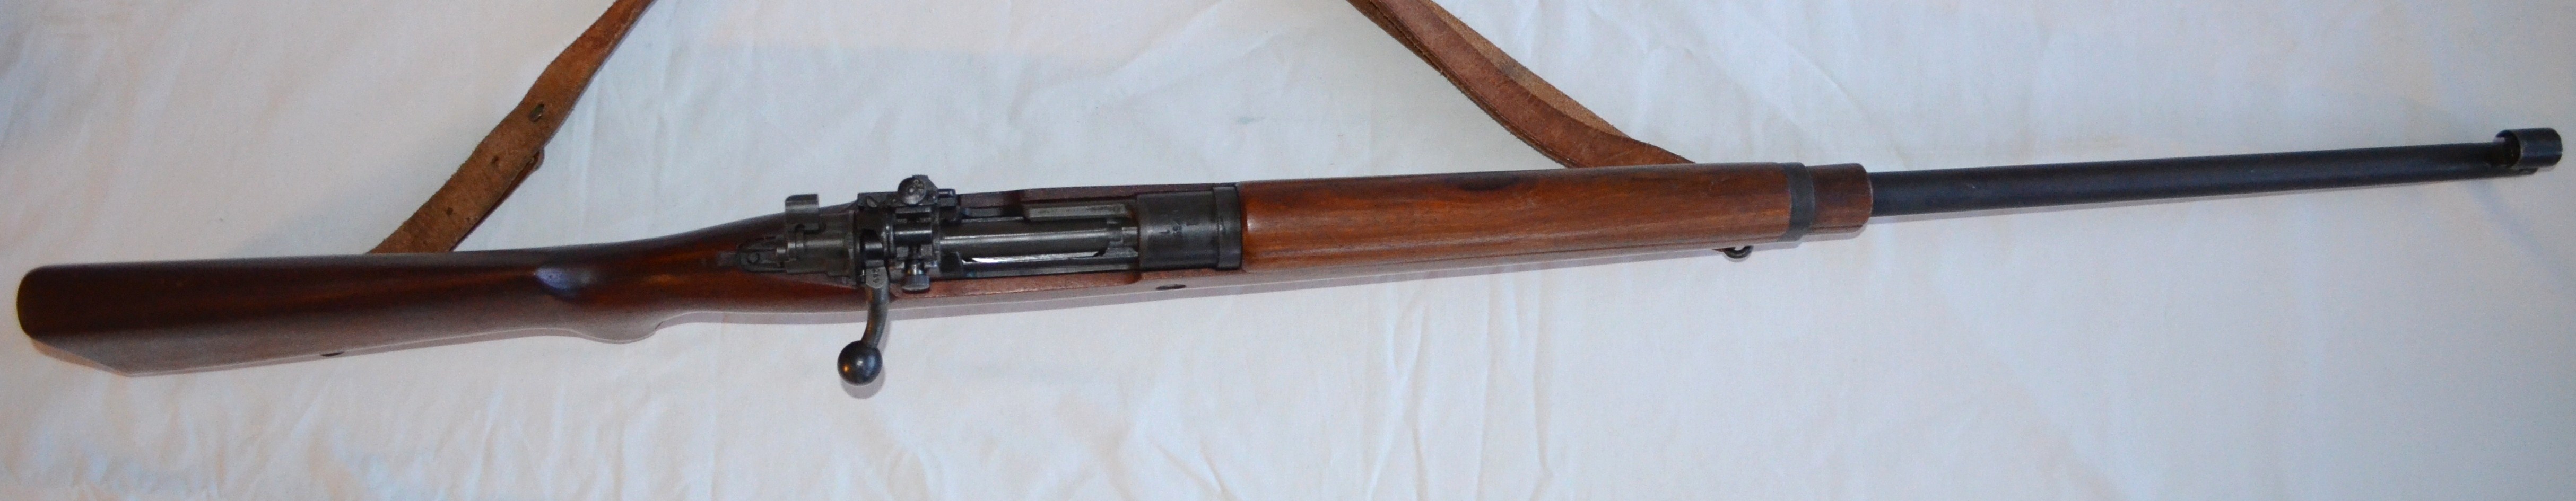 ./guns/rifle/bilder/Rifle-Kongsberg-Mauser-M59F1-62269-3.jpg